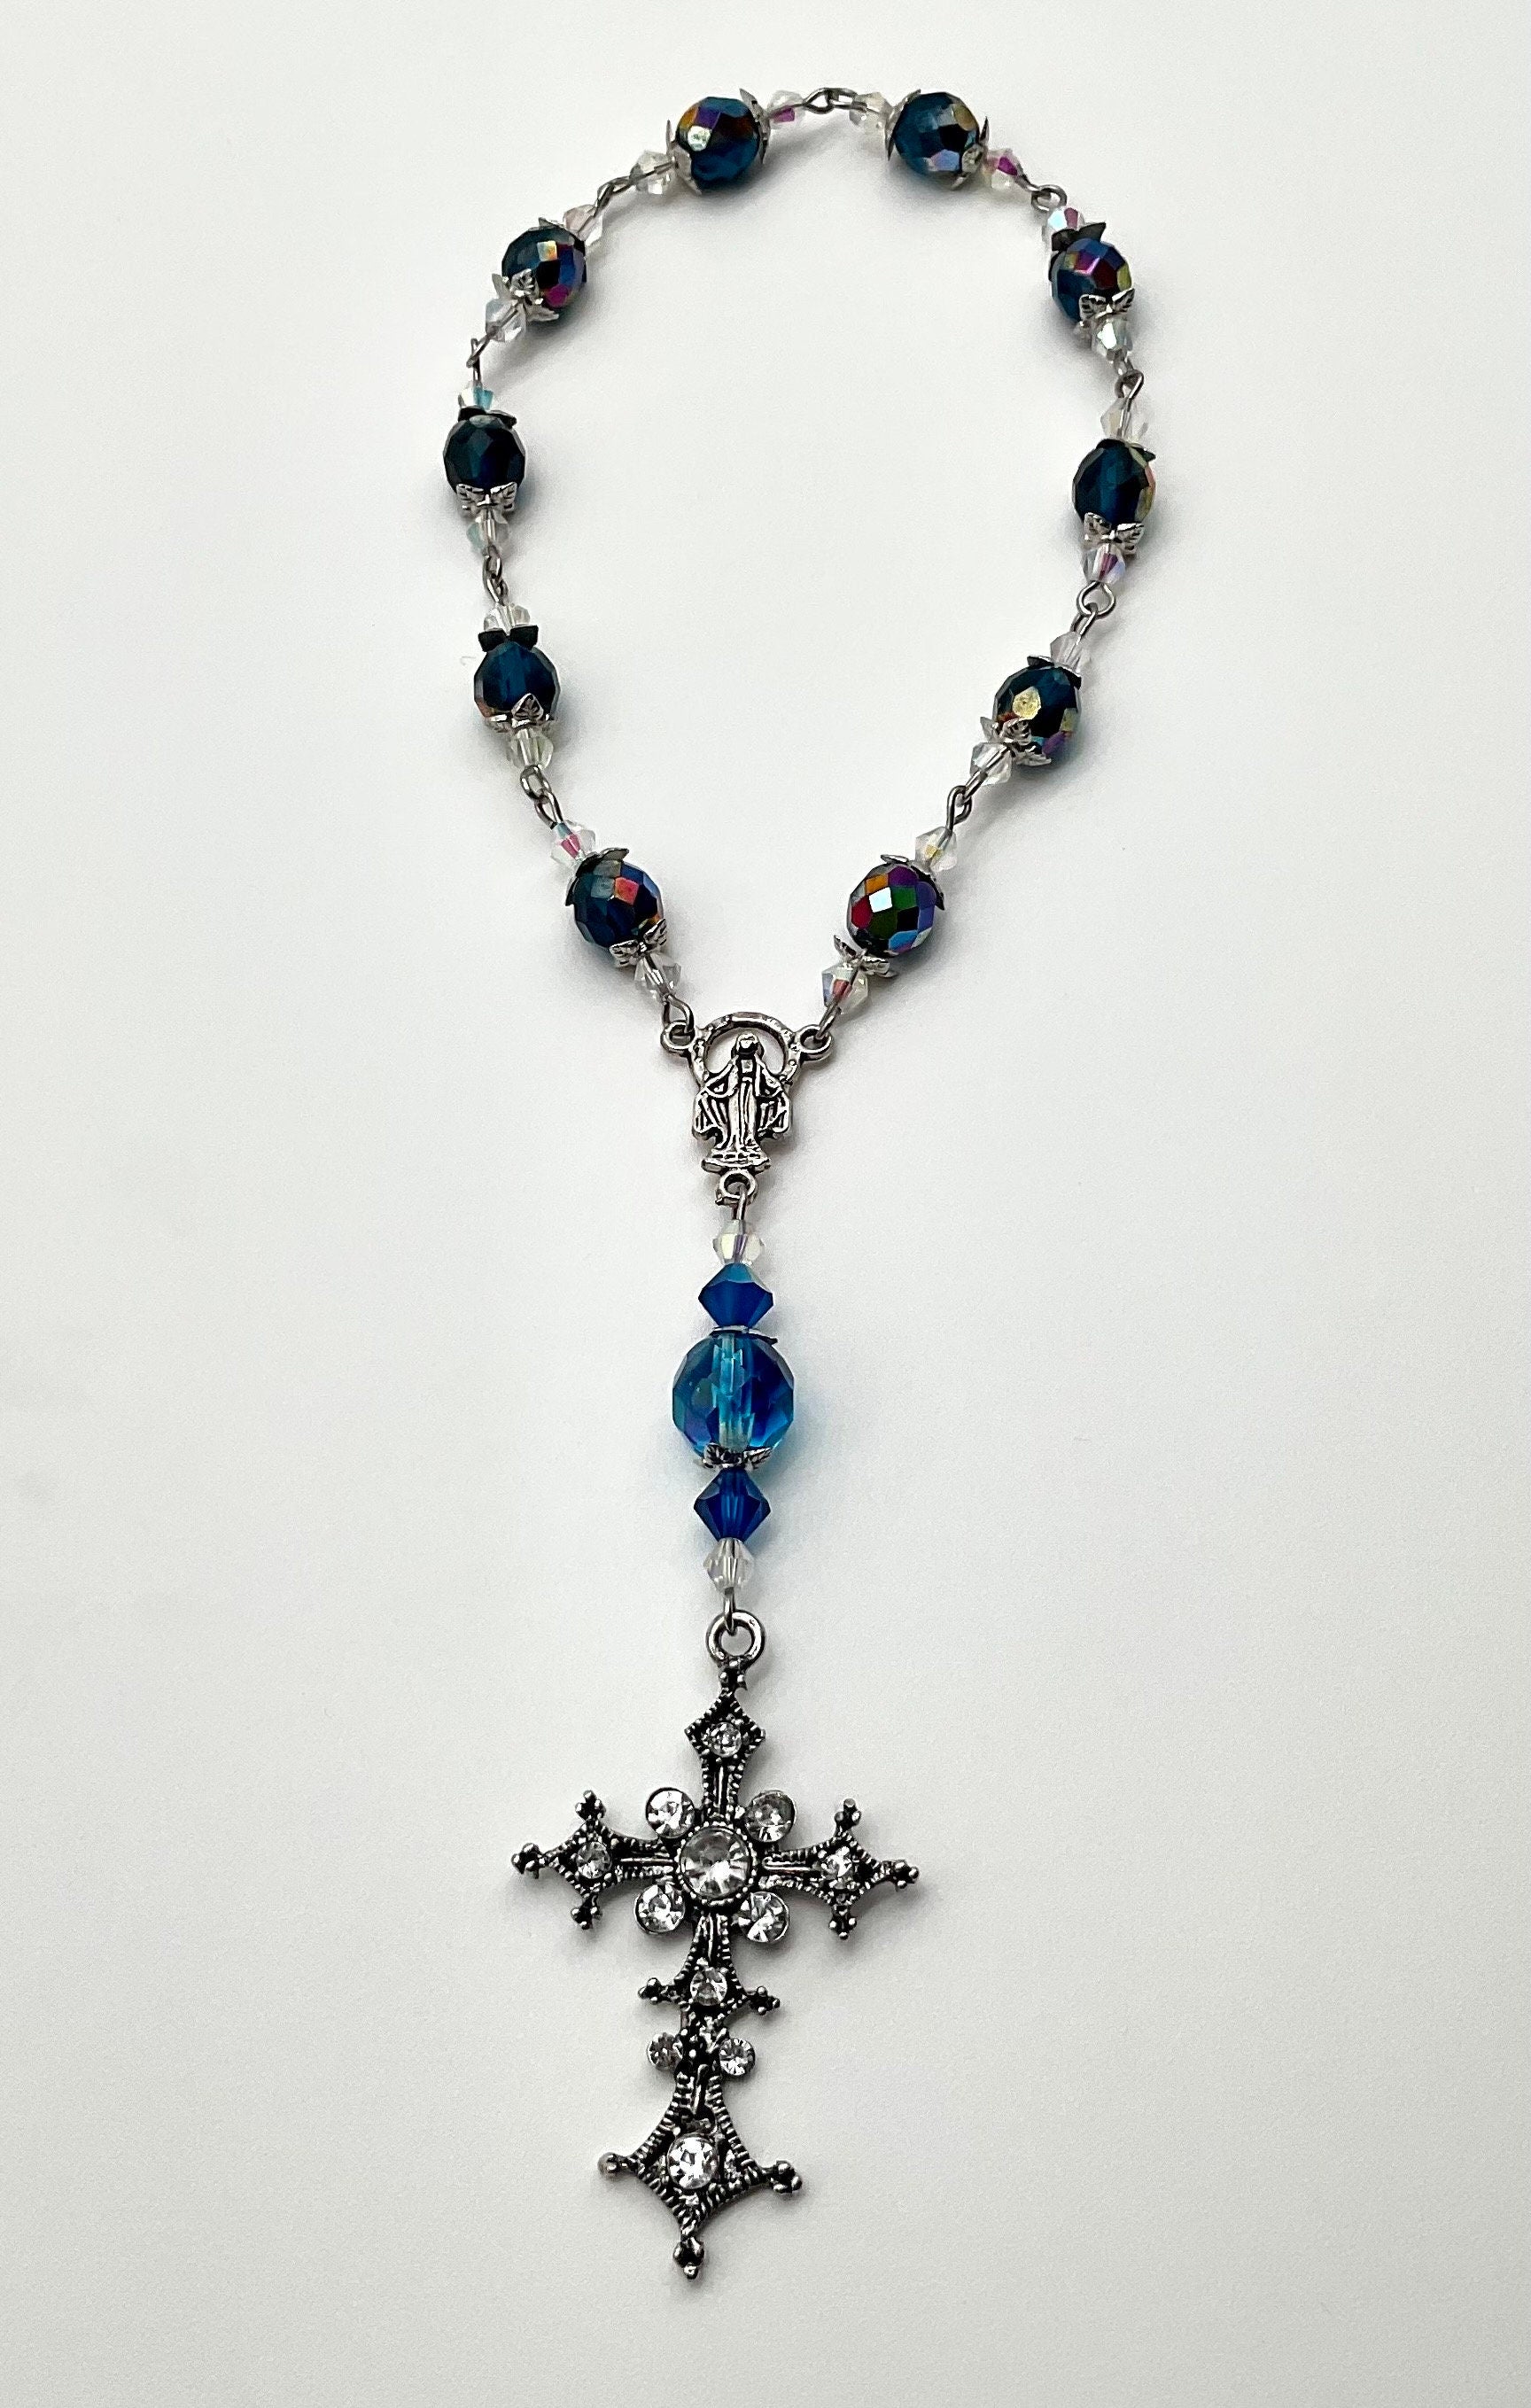 Blue Crystal Beaded Pocket Rosary Catholic Christian Religious Jewelry Hand Made with Rhinestone Accent Cross - 1 Decade